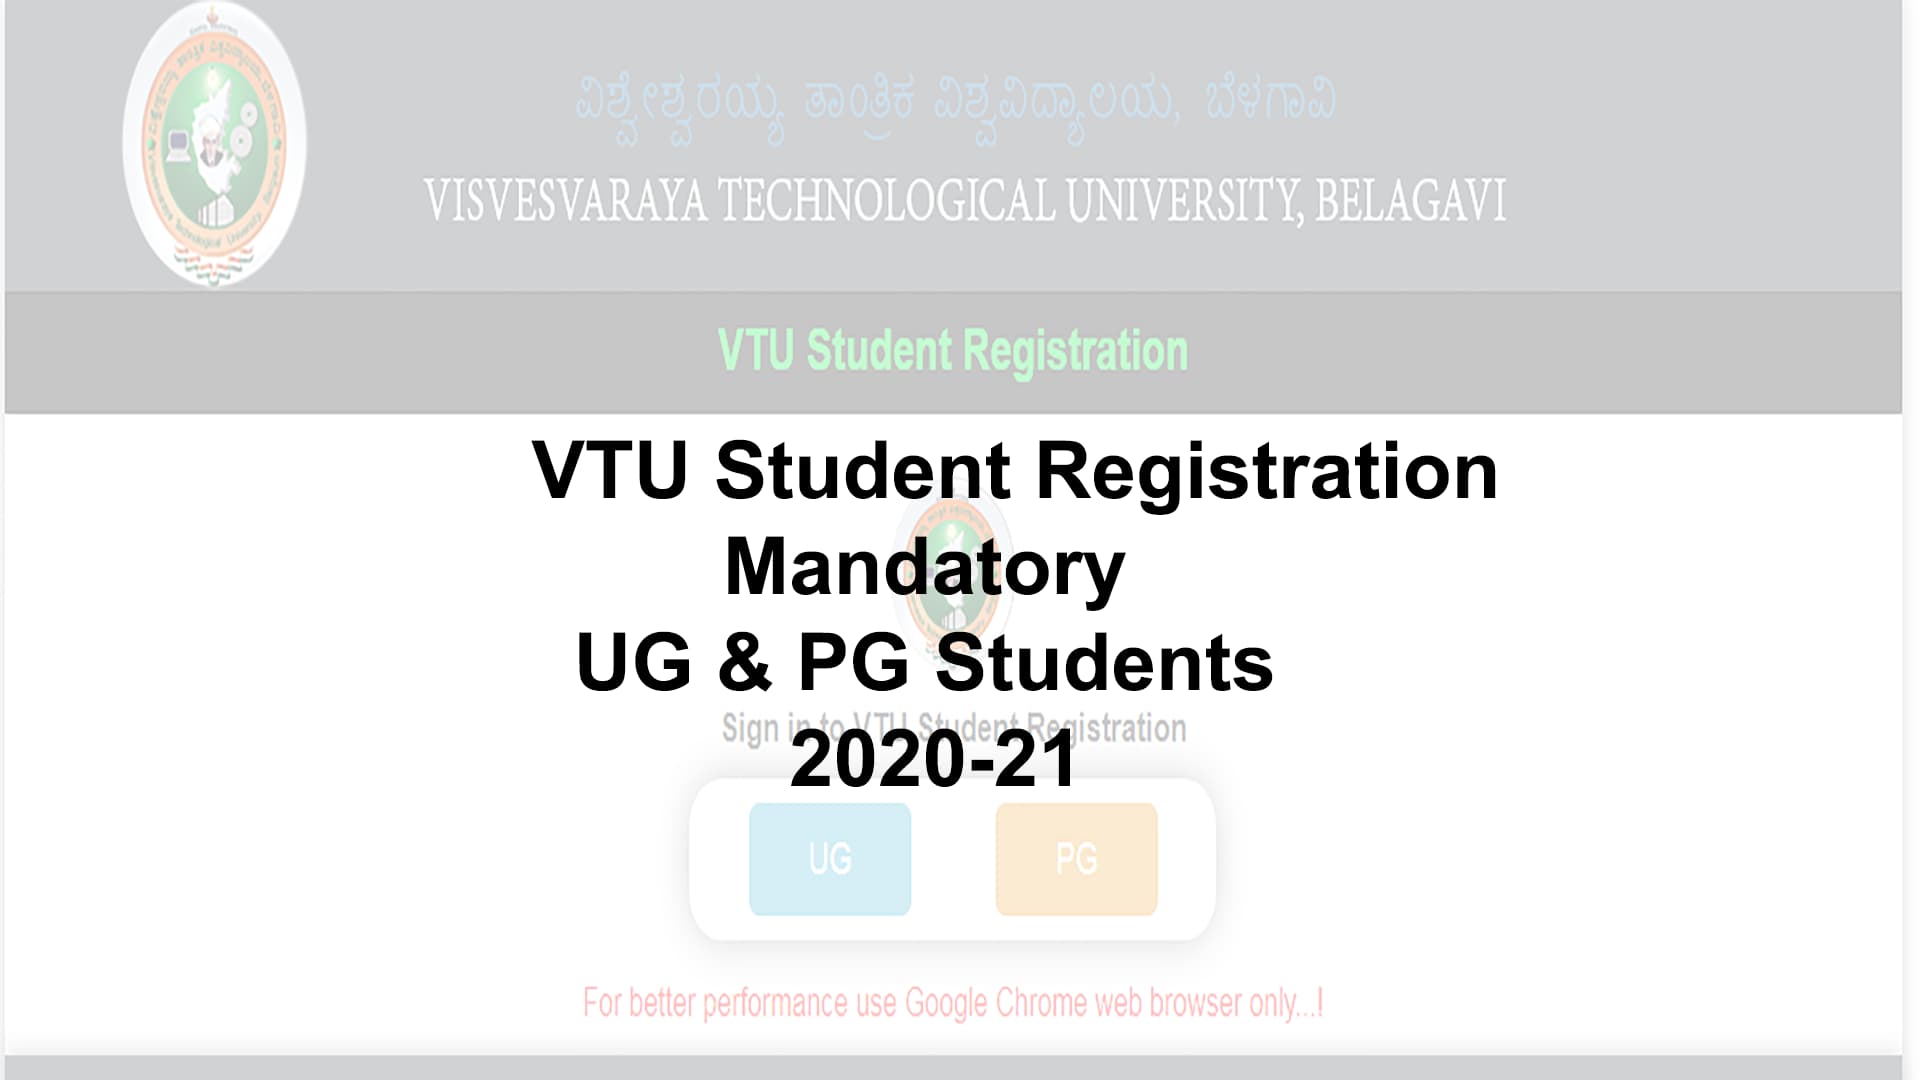 VTU Student Registration Mandatory for 2020-21